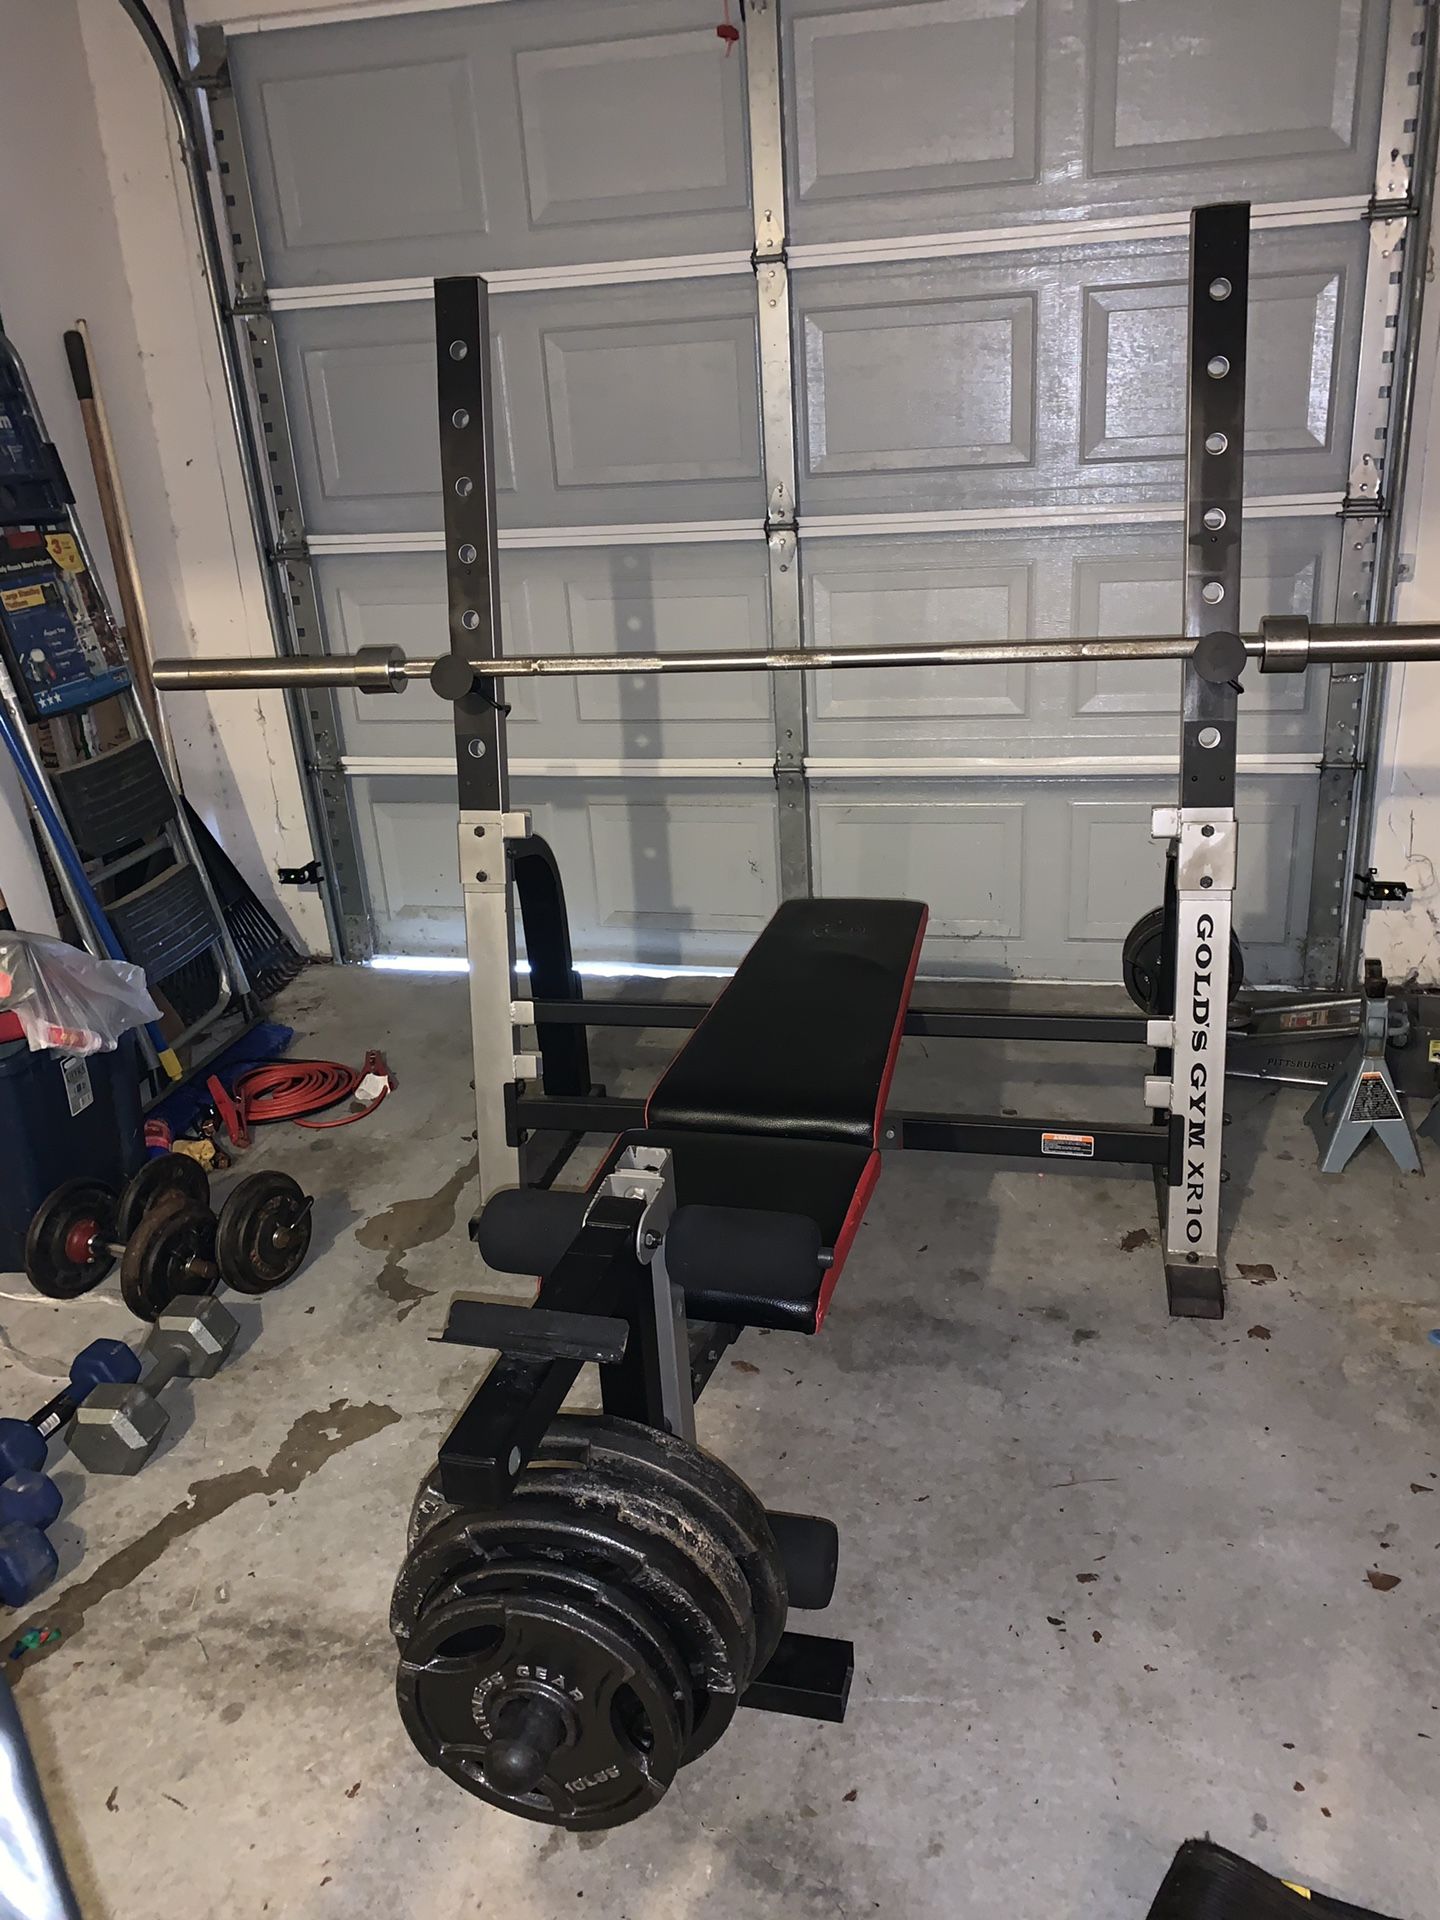 A weight bench